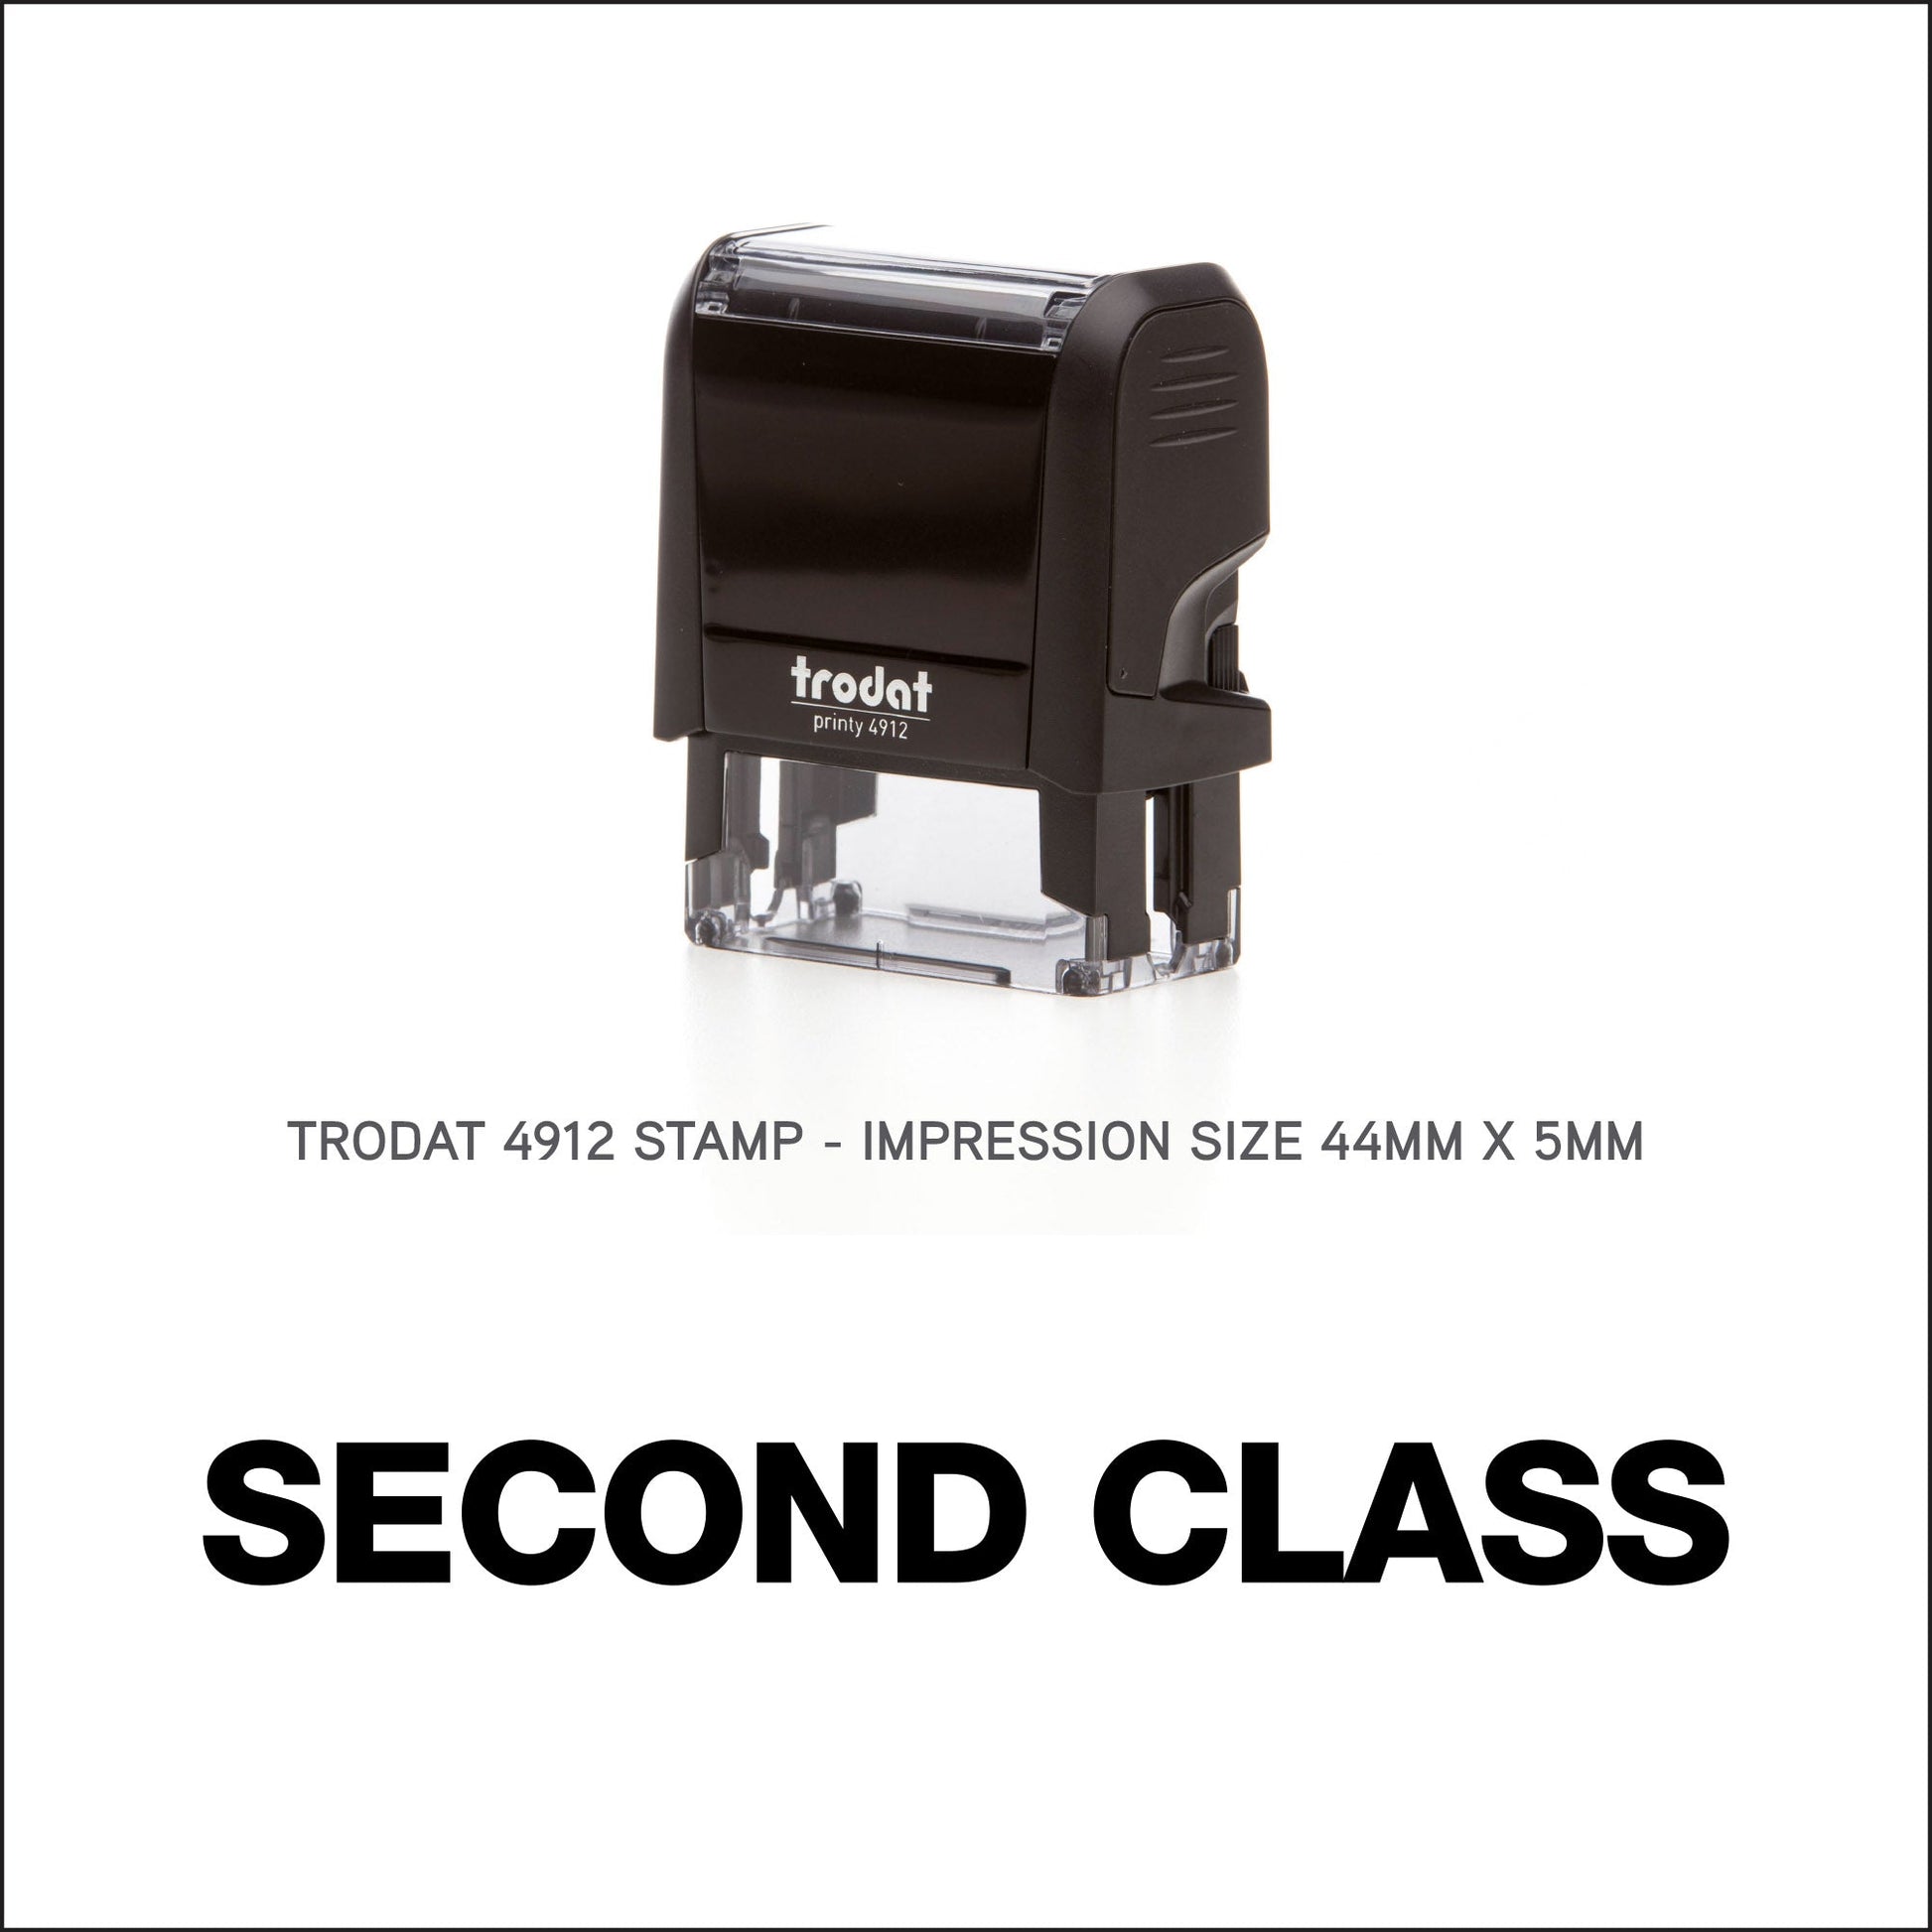 Second Class - Rubber Stamp - Trodat 4912 - 44mm x 5mm Impression